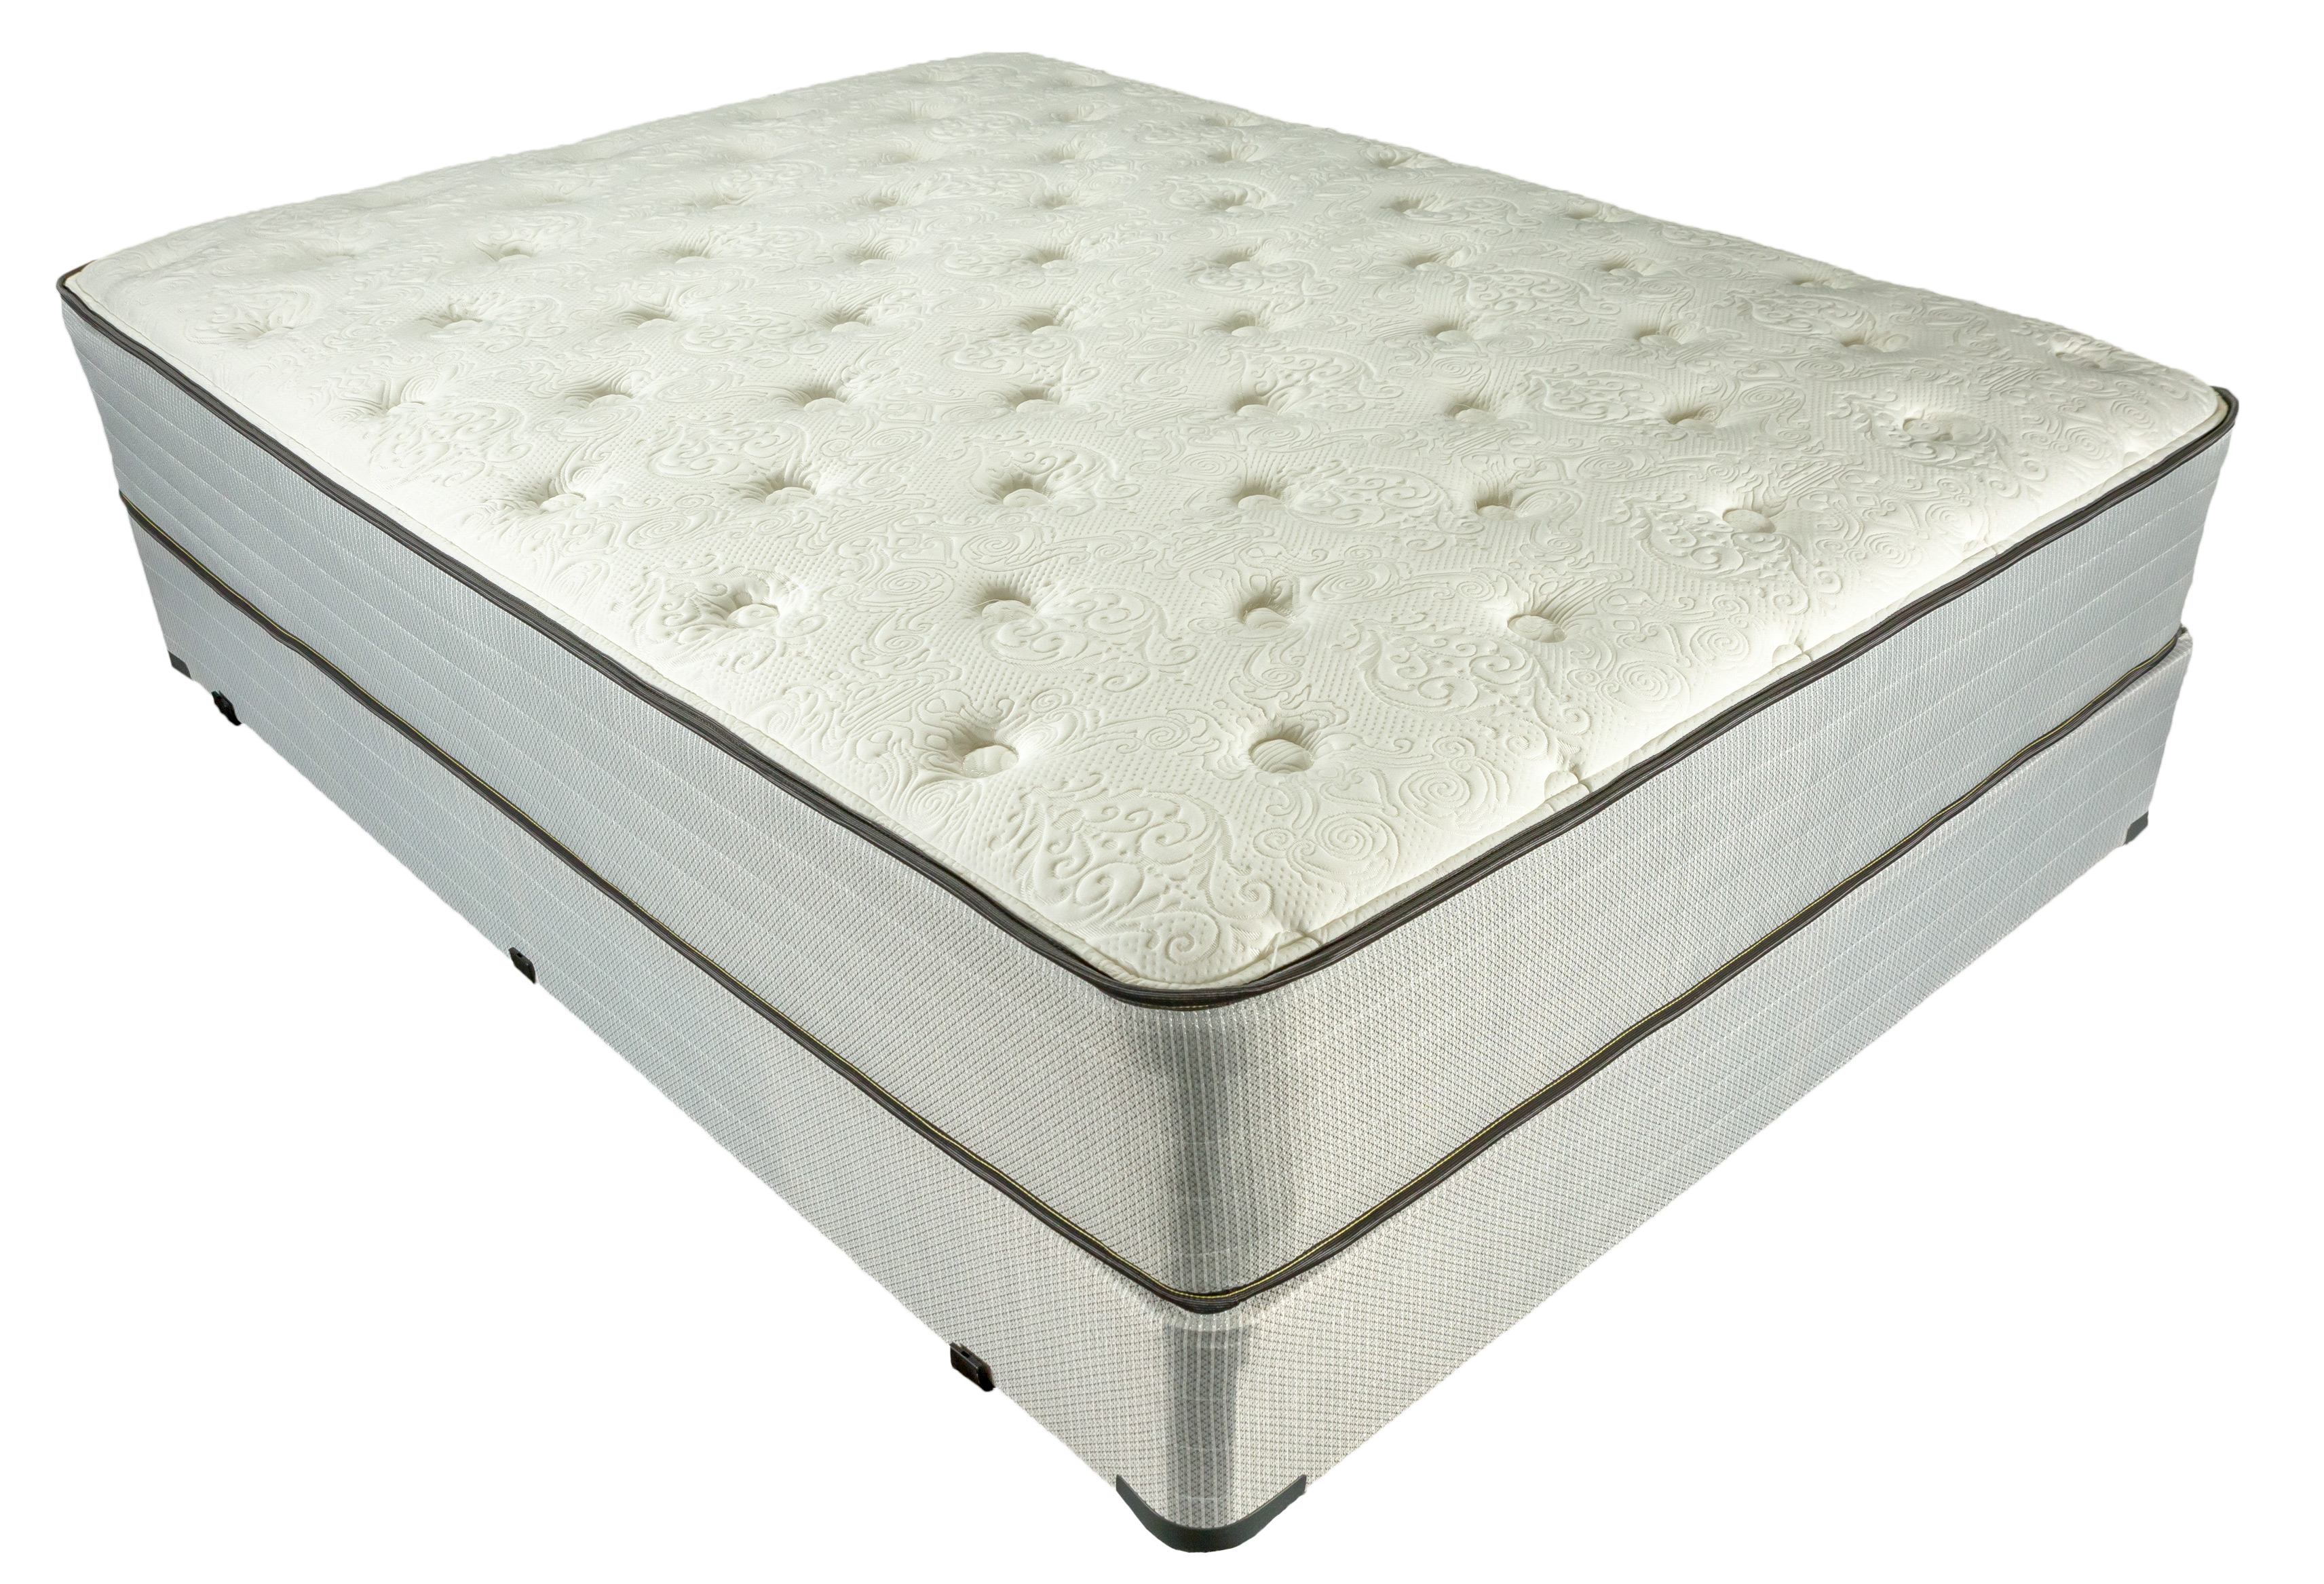 mckinley therapedic hybrid mattress